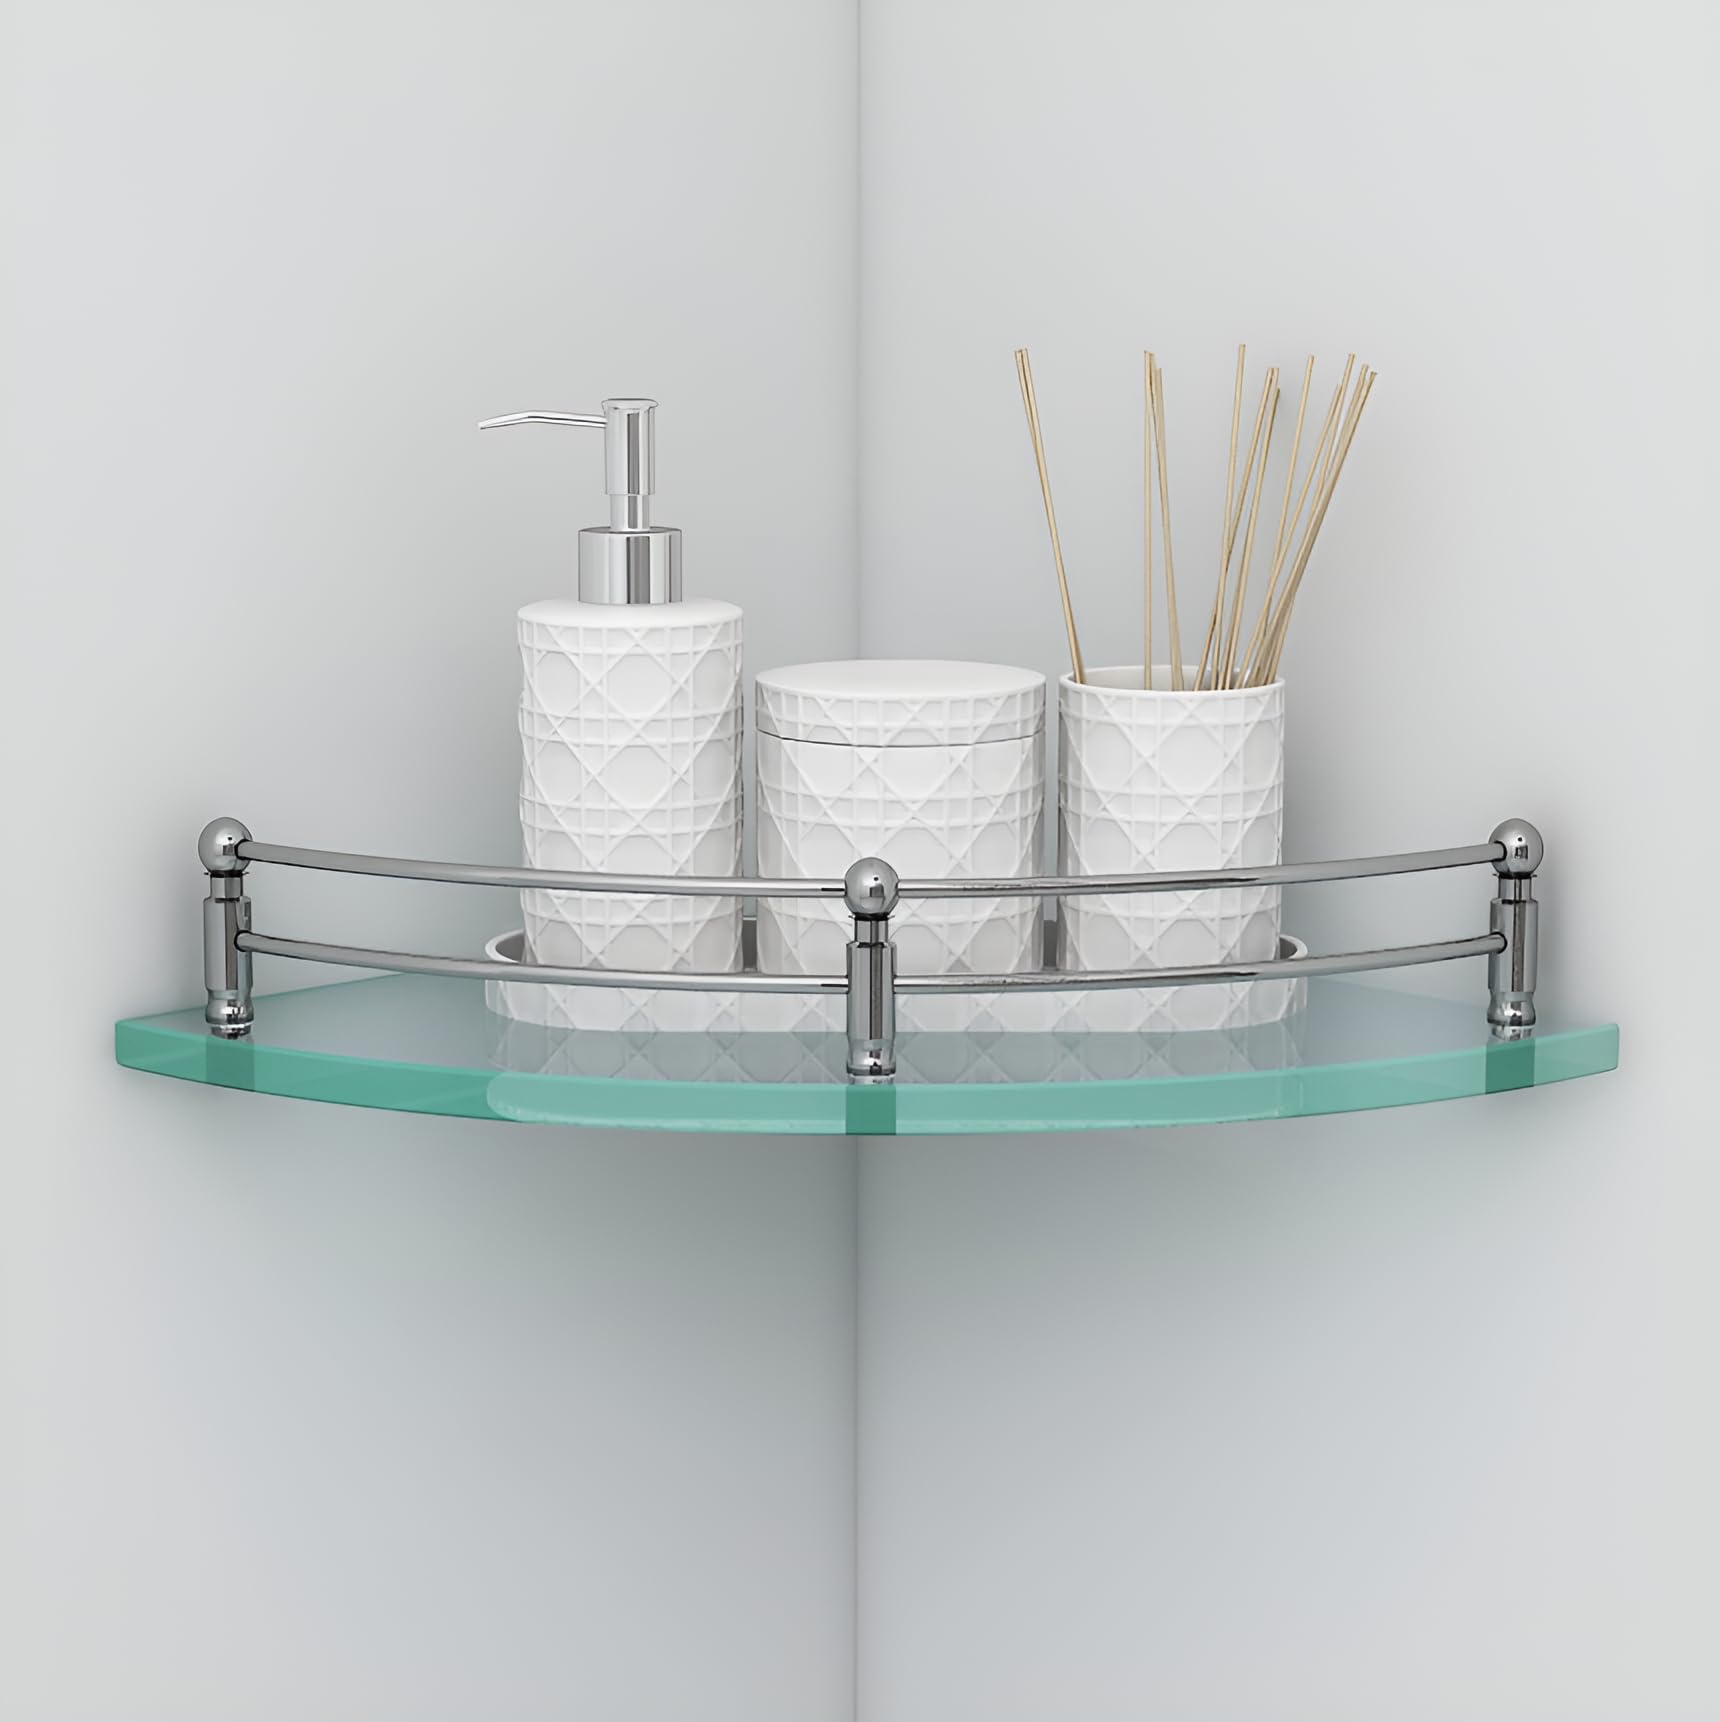 Plantex Premium Transparent Mirrored, Chrome Glass Corner Wall Storage Shelf for Bathroom (9x9 Inches) - Pack of 3